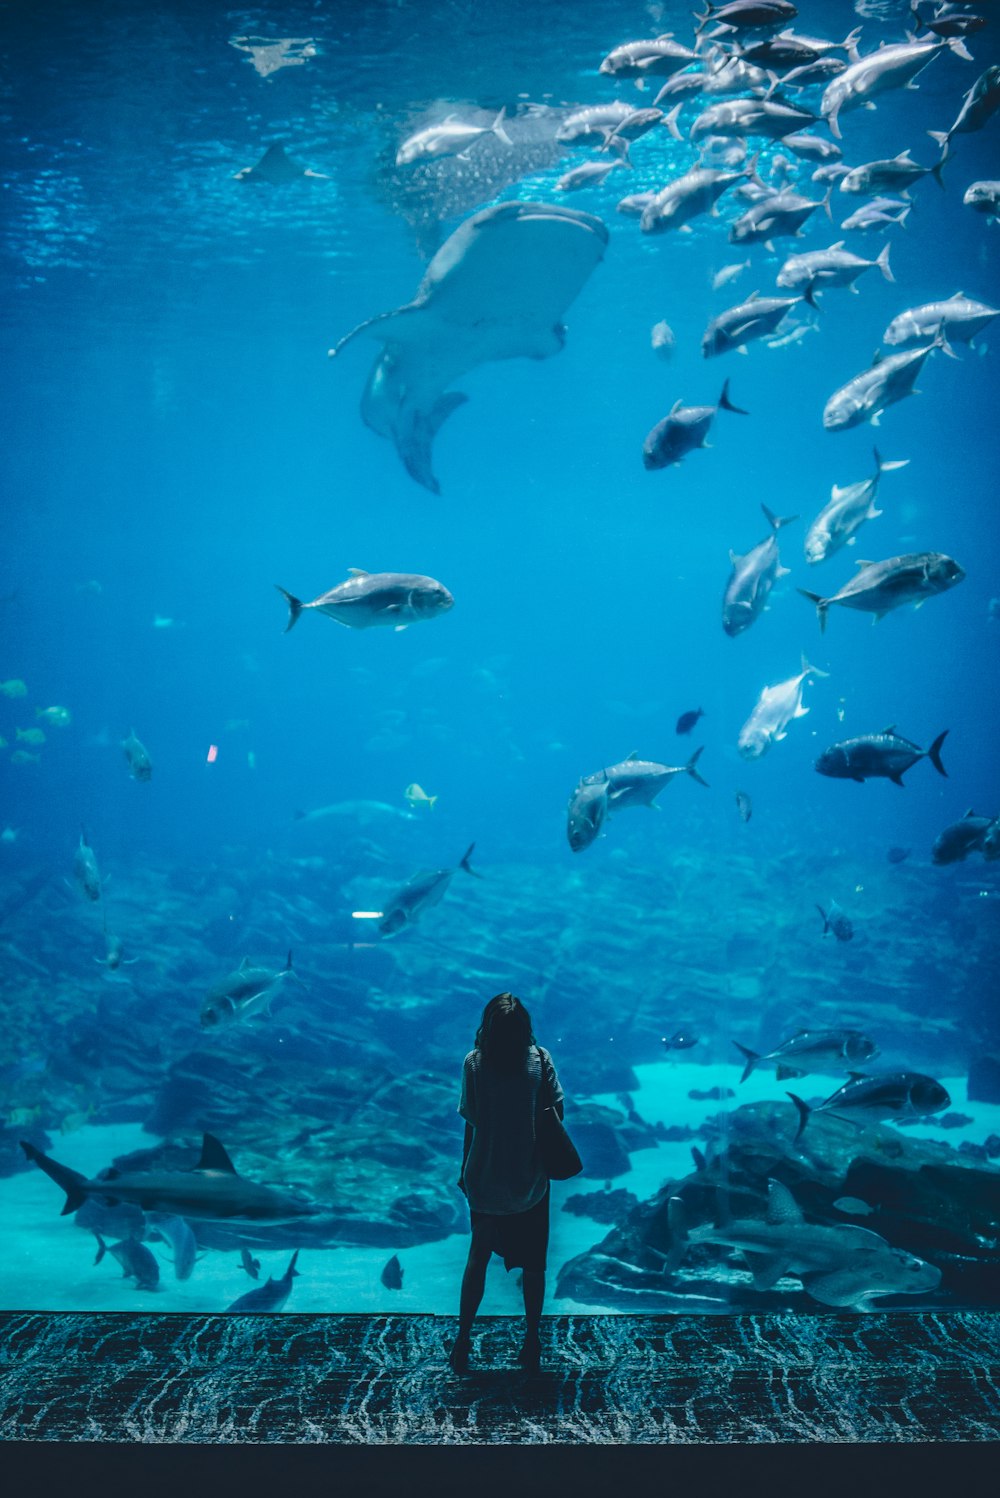 750+ Aquarium Pictures [HD] | Download Free Images on Unsplash